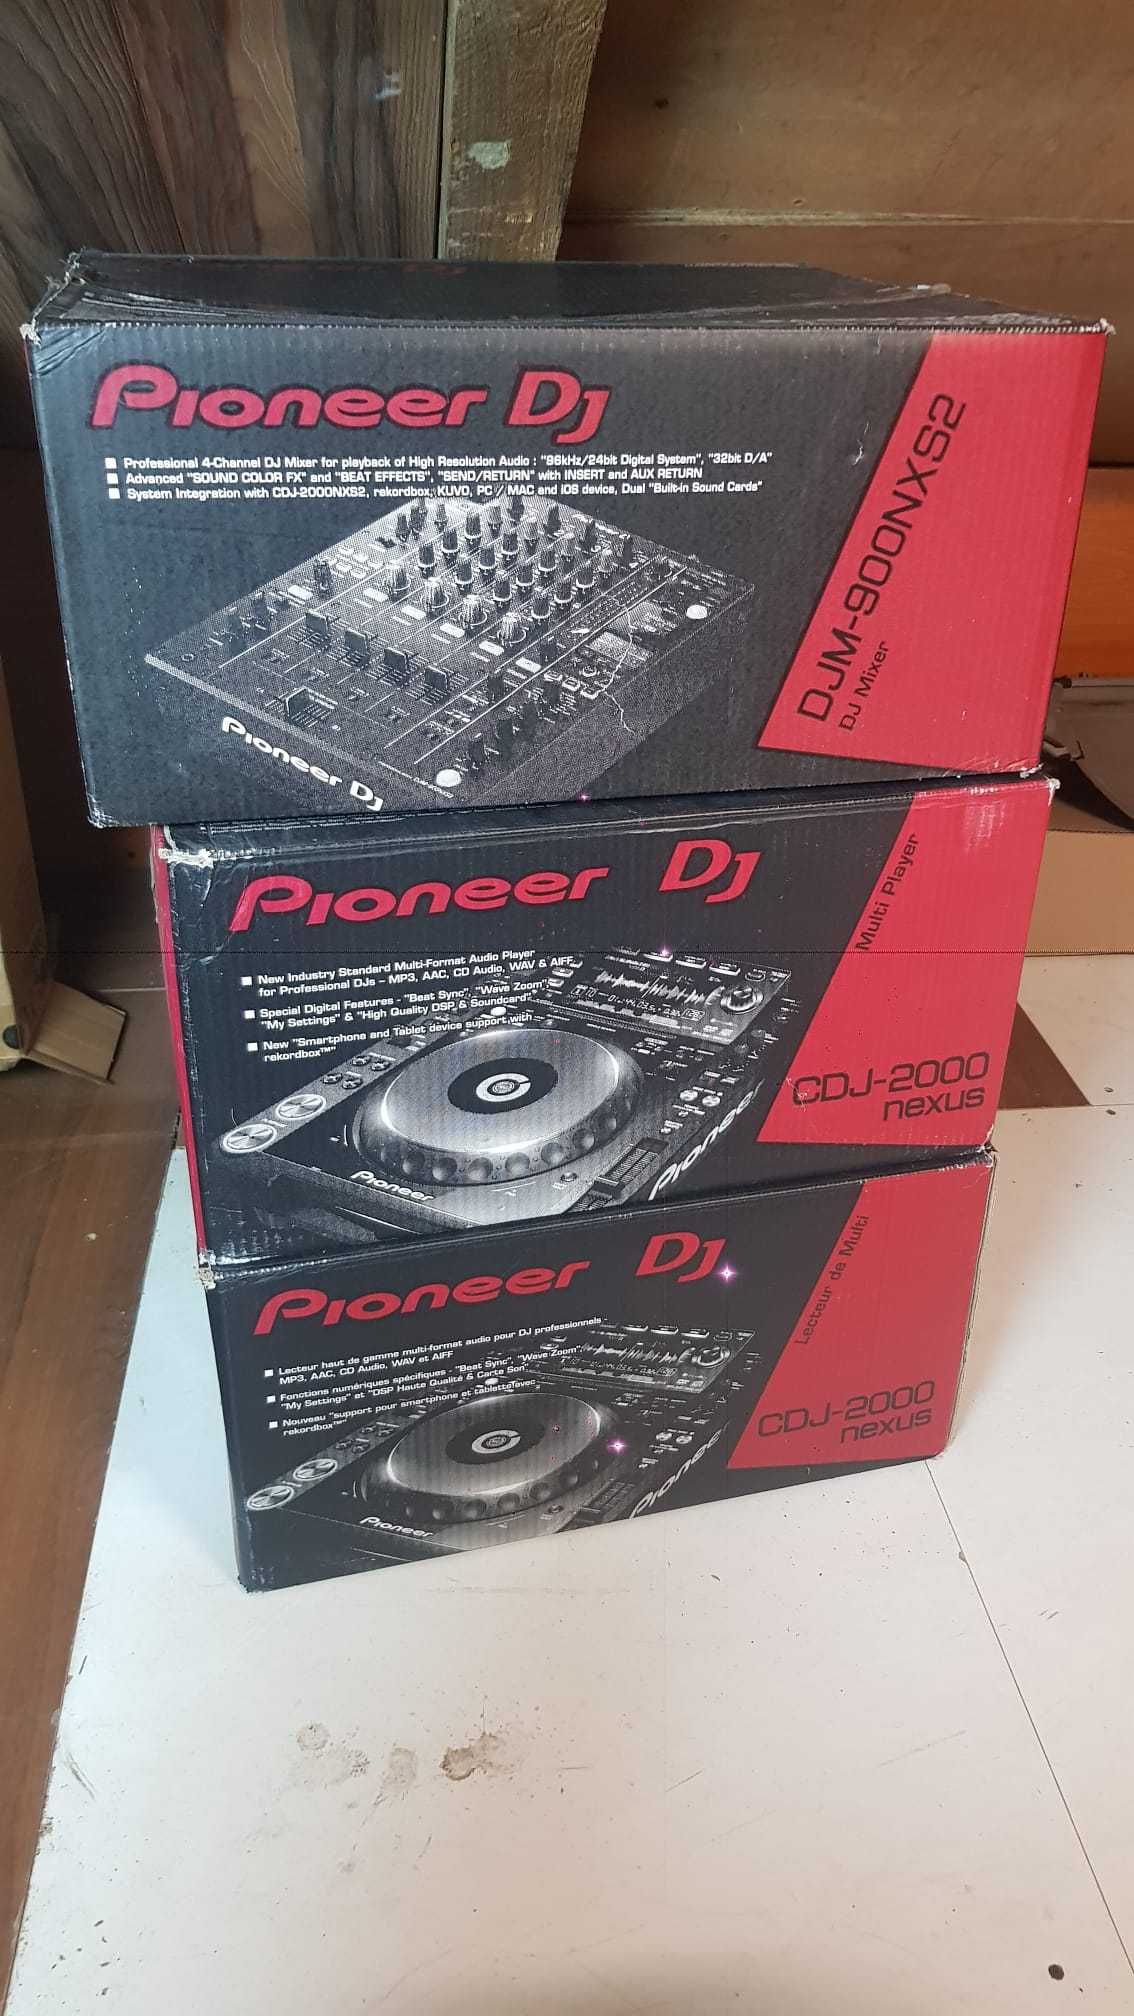 Pioneer DJM 900SRT nexus Serato & Rekordbox